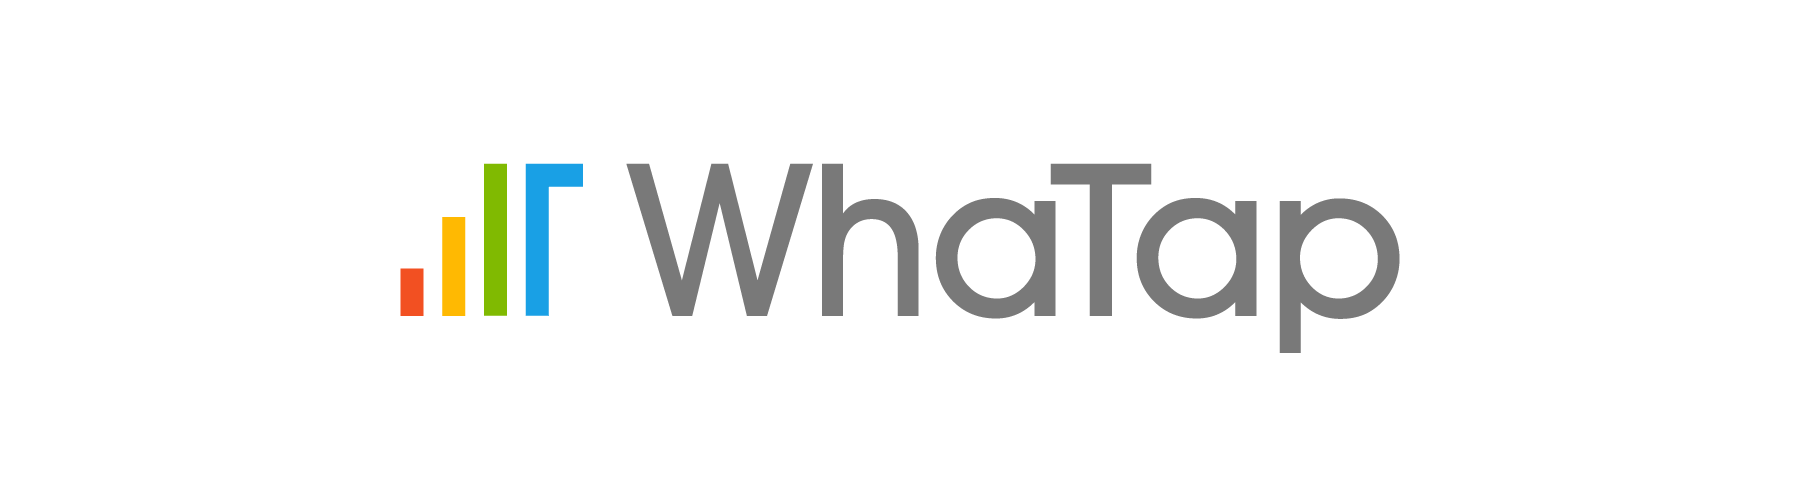 whatap_logo